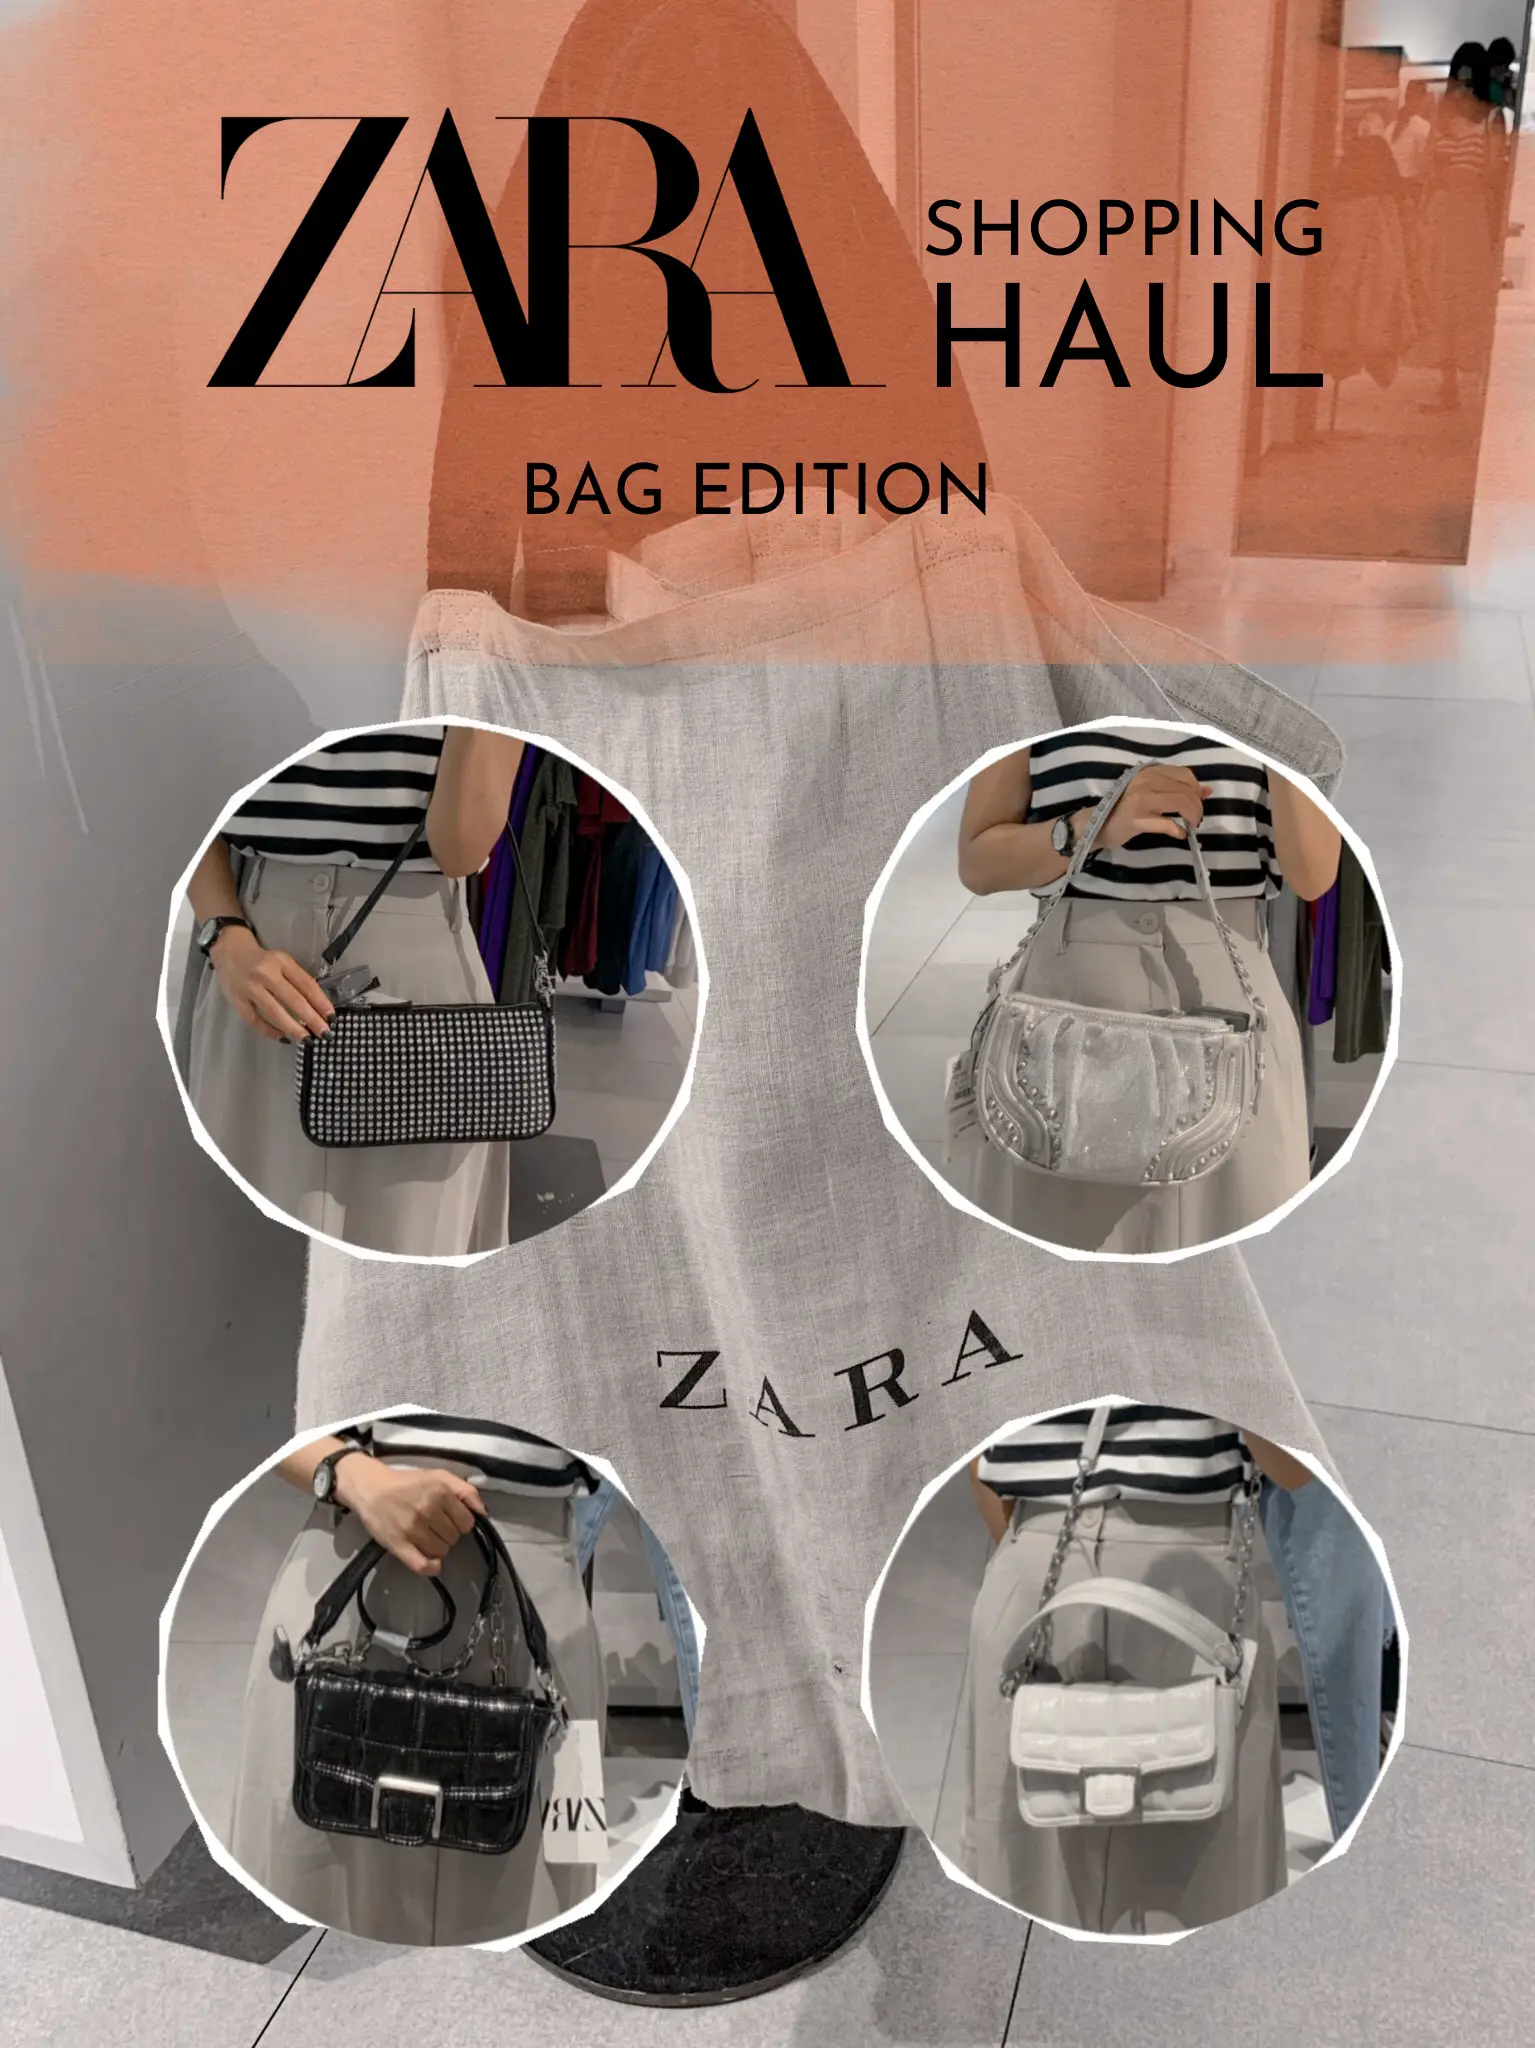 Zara haul bags  Bags, Zara haul, Zara bags